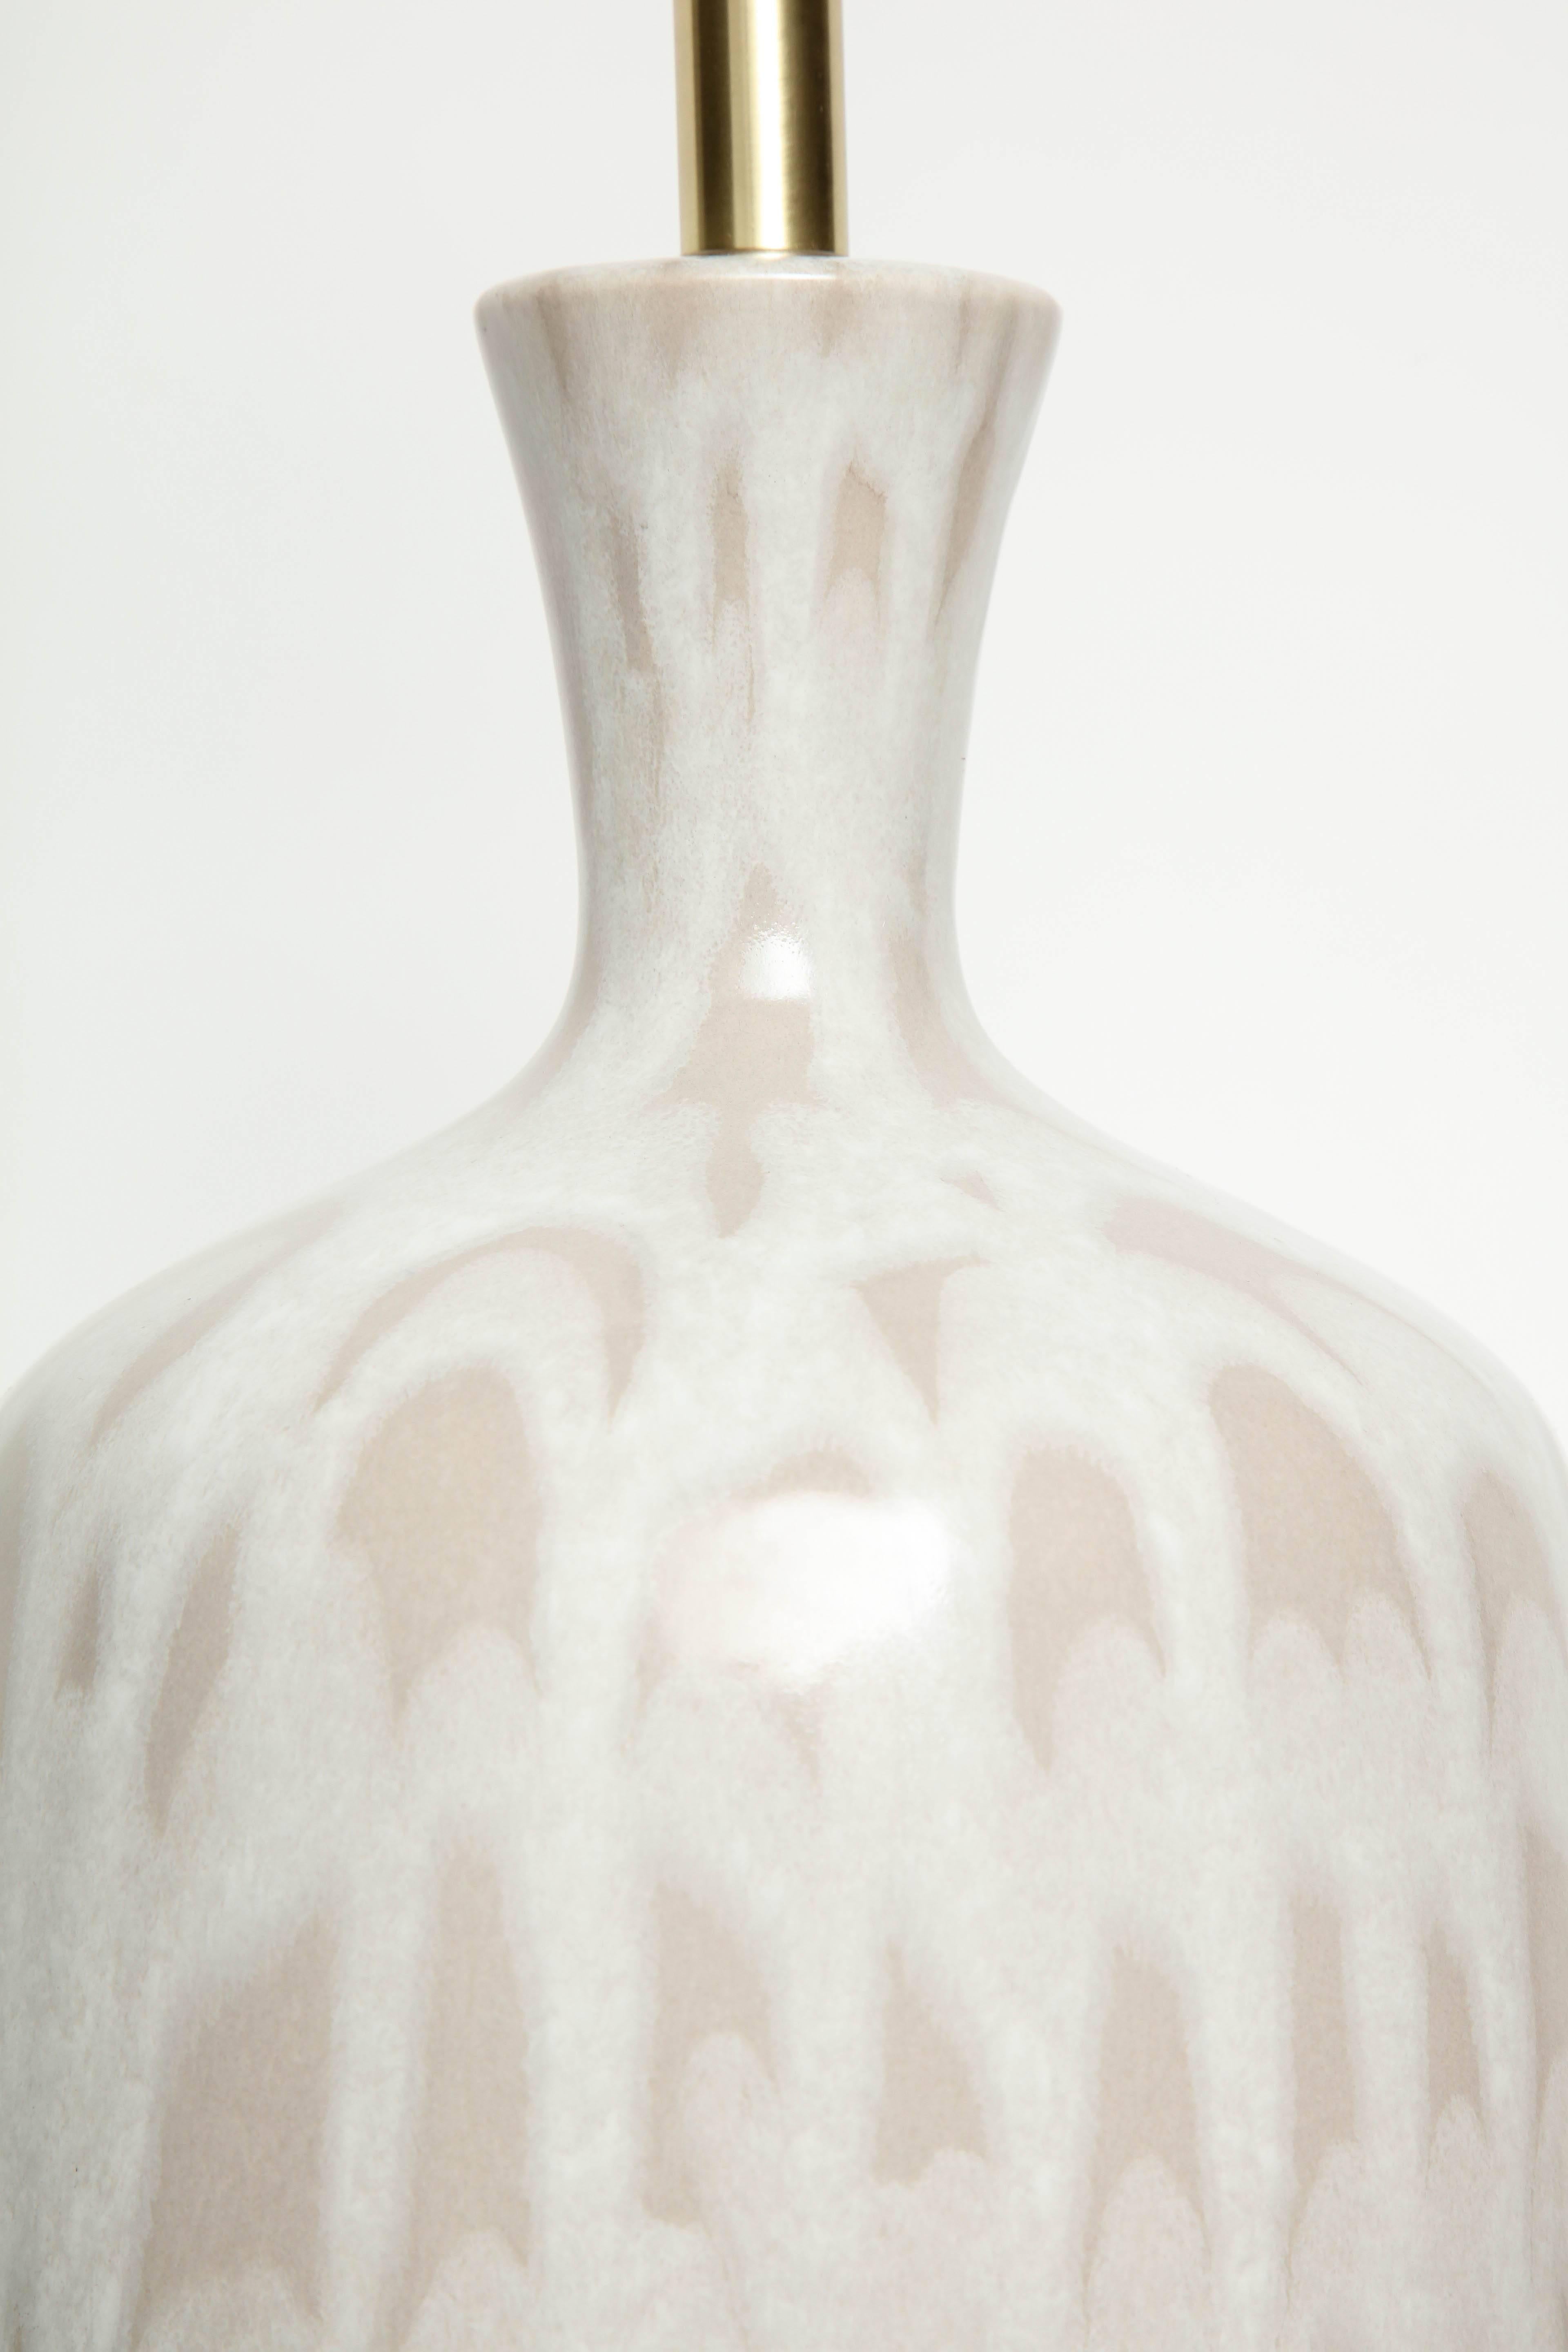 Glazed Italian Tan and White Ceramic Lamps